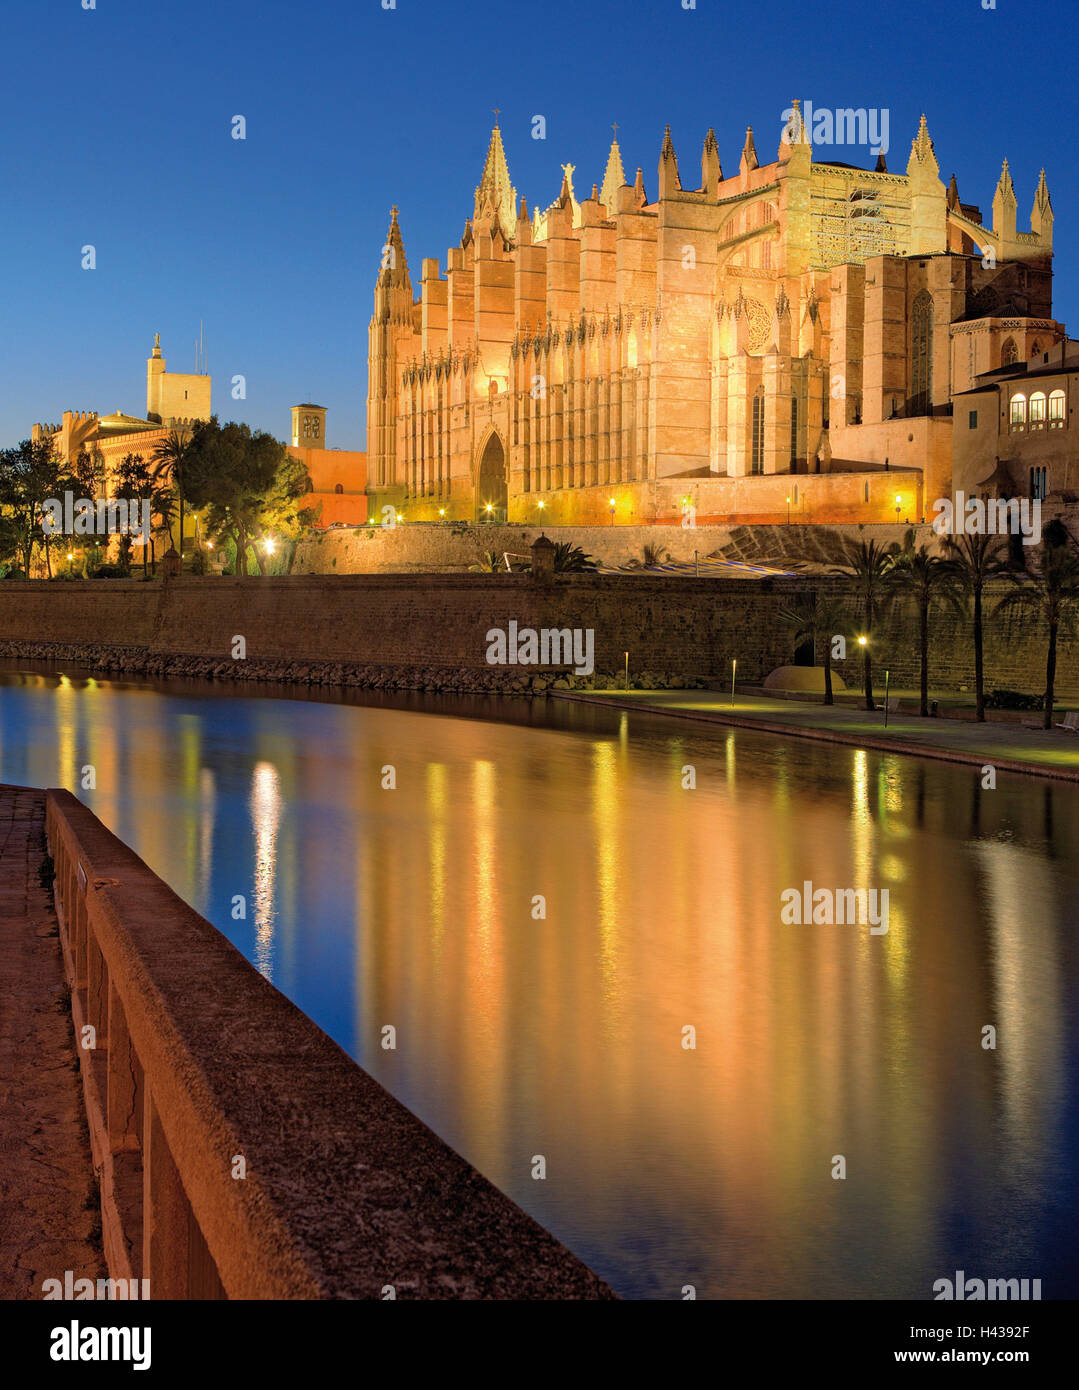 Spain, the Balearic Islands, island Majorca, Palma, cathedral La Seu, lighting, evening, river, Stock Photo